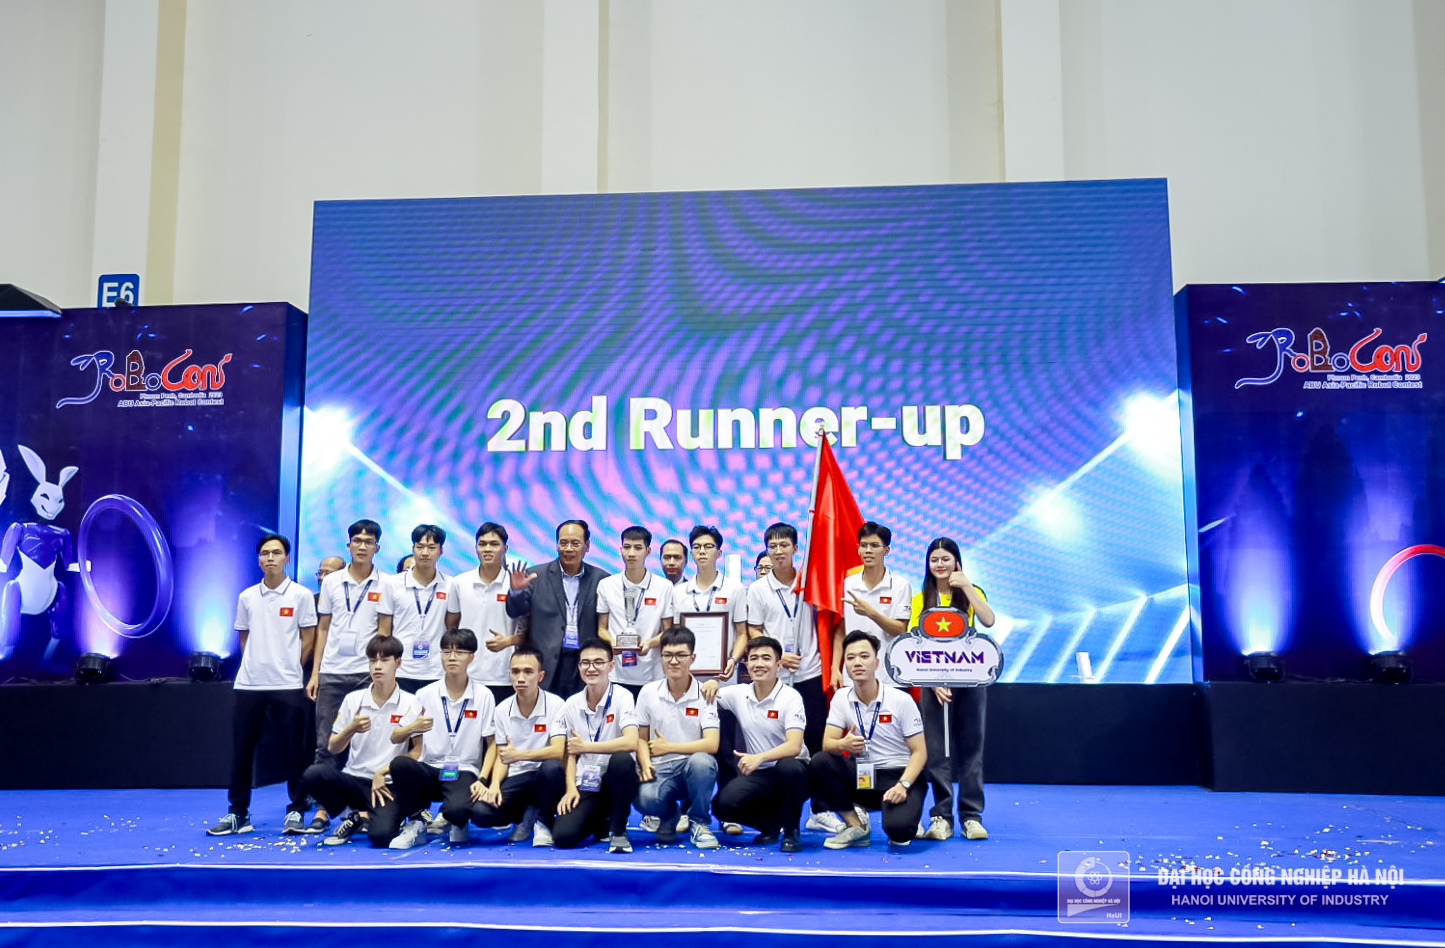 Team DCN-DT02, Hanoi University of Industry ranked 3rd in ABU Robocon 2023